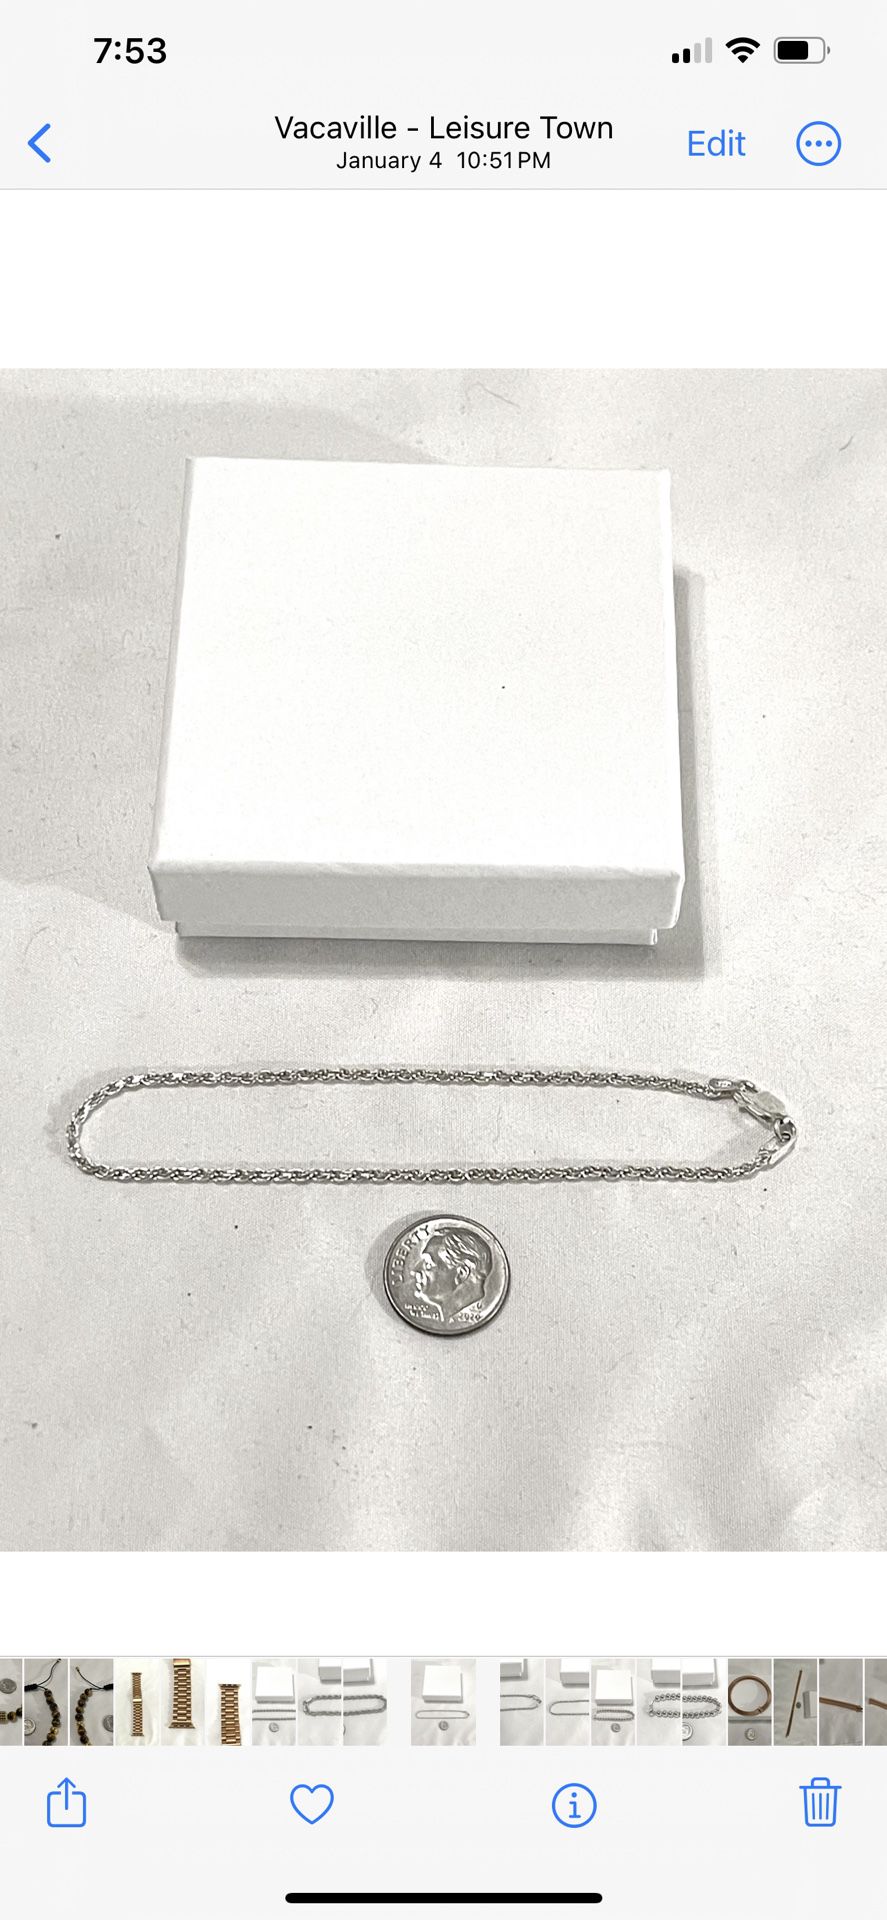 Brand New 8-1/2” Rope Style Silver Bracelet 